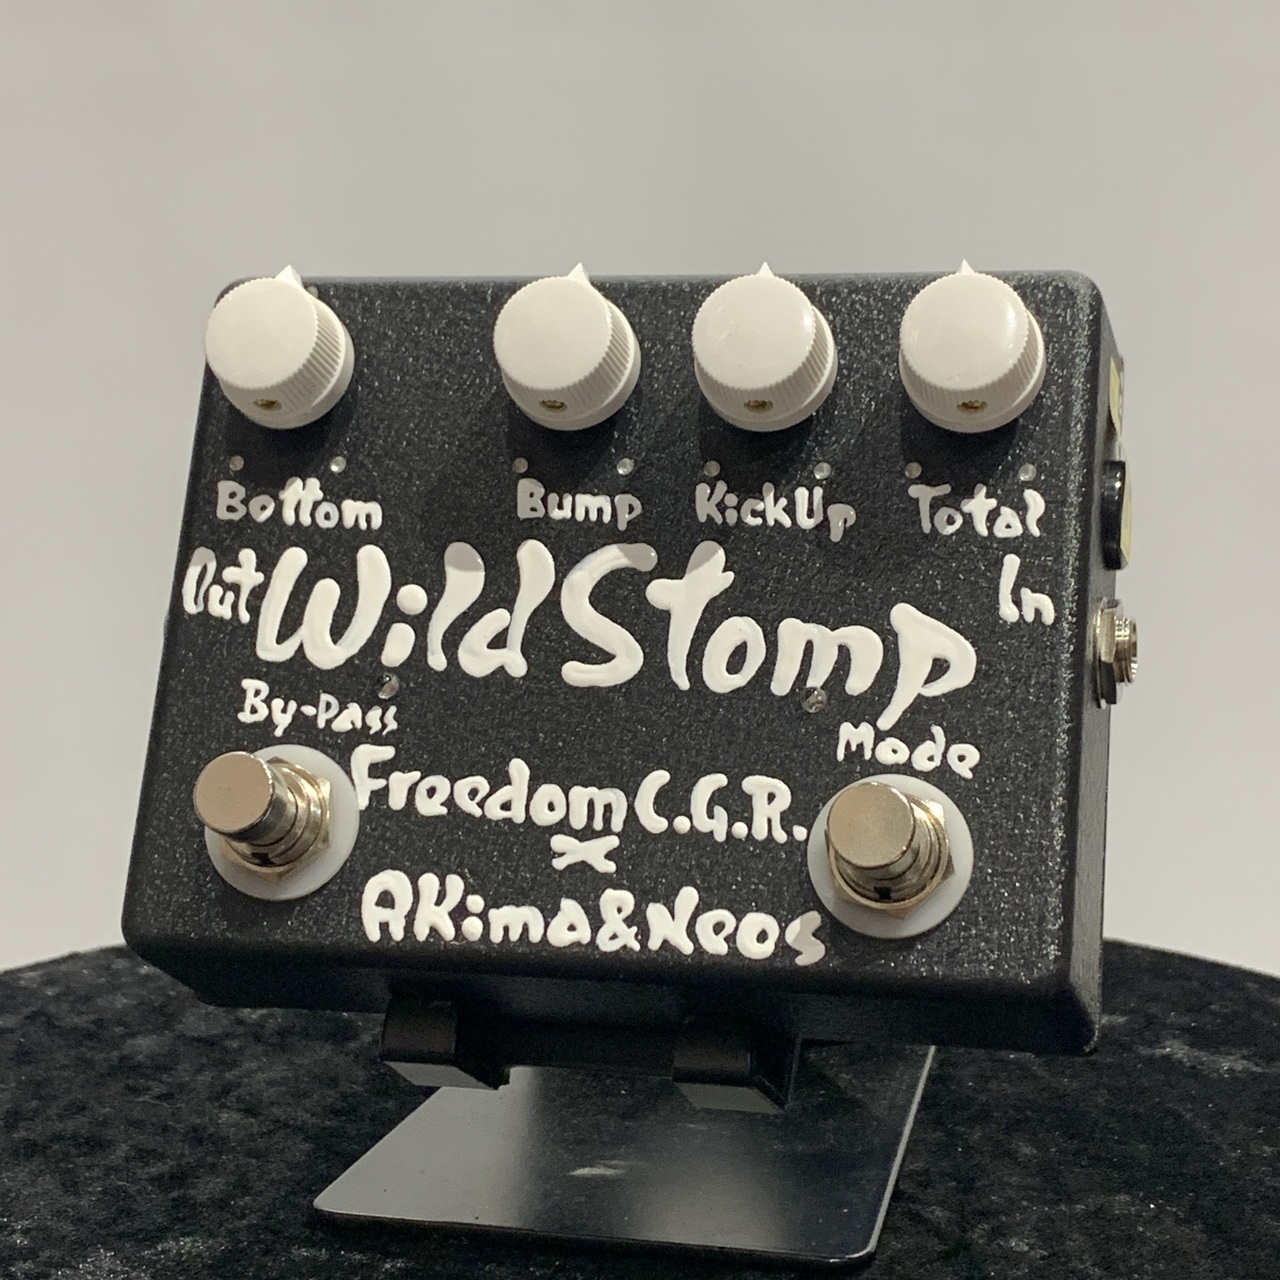 Freedom C.G.R ×AKIMA & NEOS / Wild Stomp - エフェクター